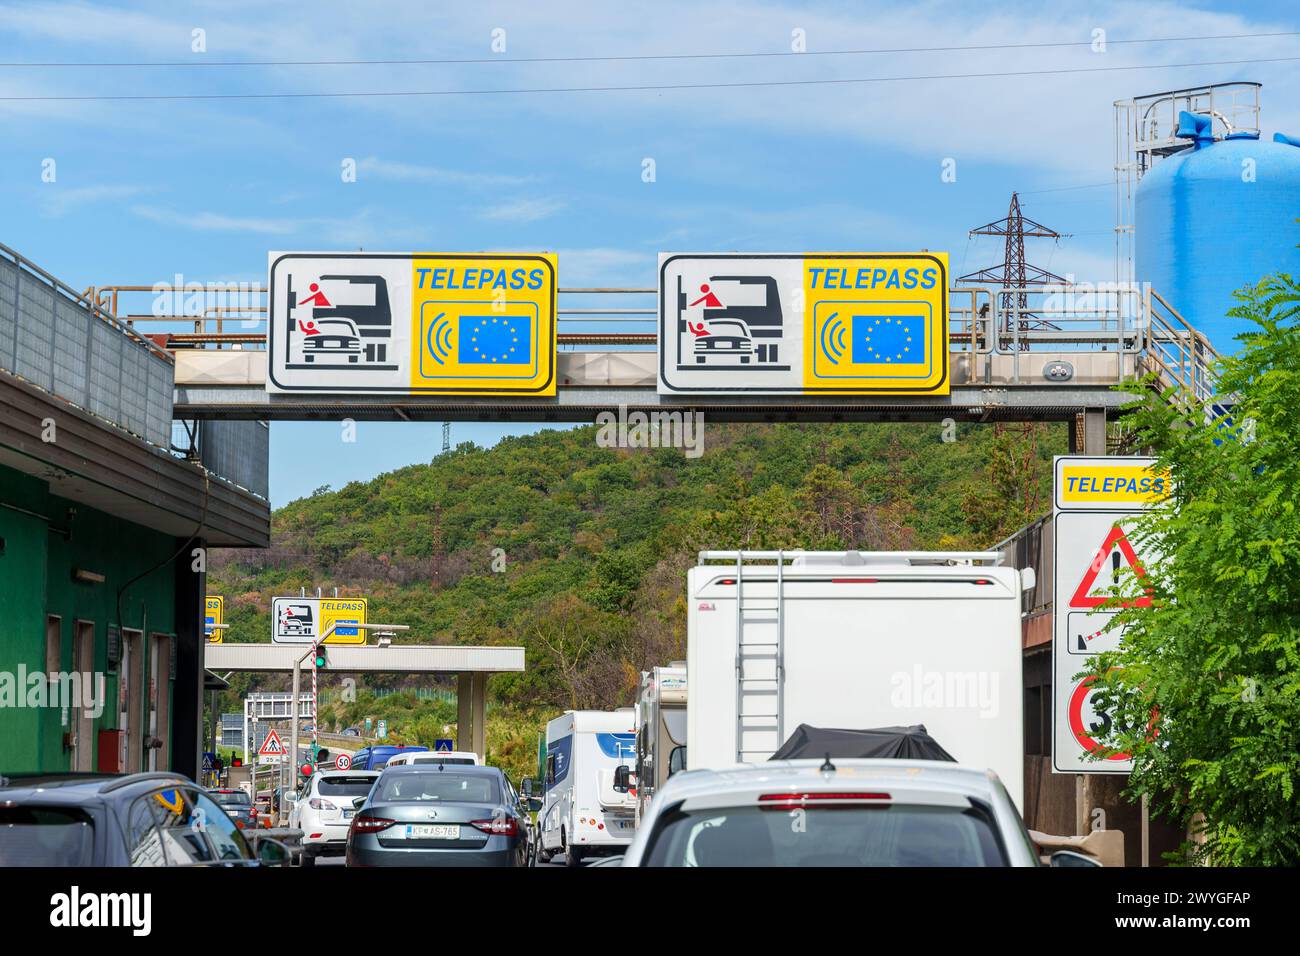 Italia - 23 settembre 2023: Ingorgo in un casello autostradale in Italia con logo TELEPASS sulle indicazioni *** Stau an einer Mautstelle auf der Autobahn in Italien mit TELEPASS Logo auf den Hinweisschildern Foto Stock